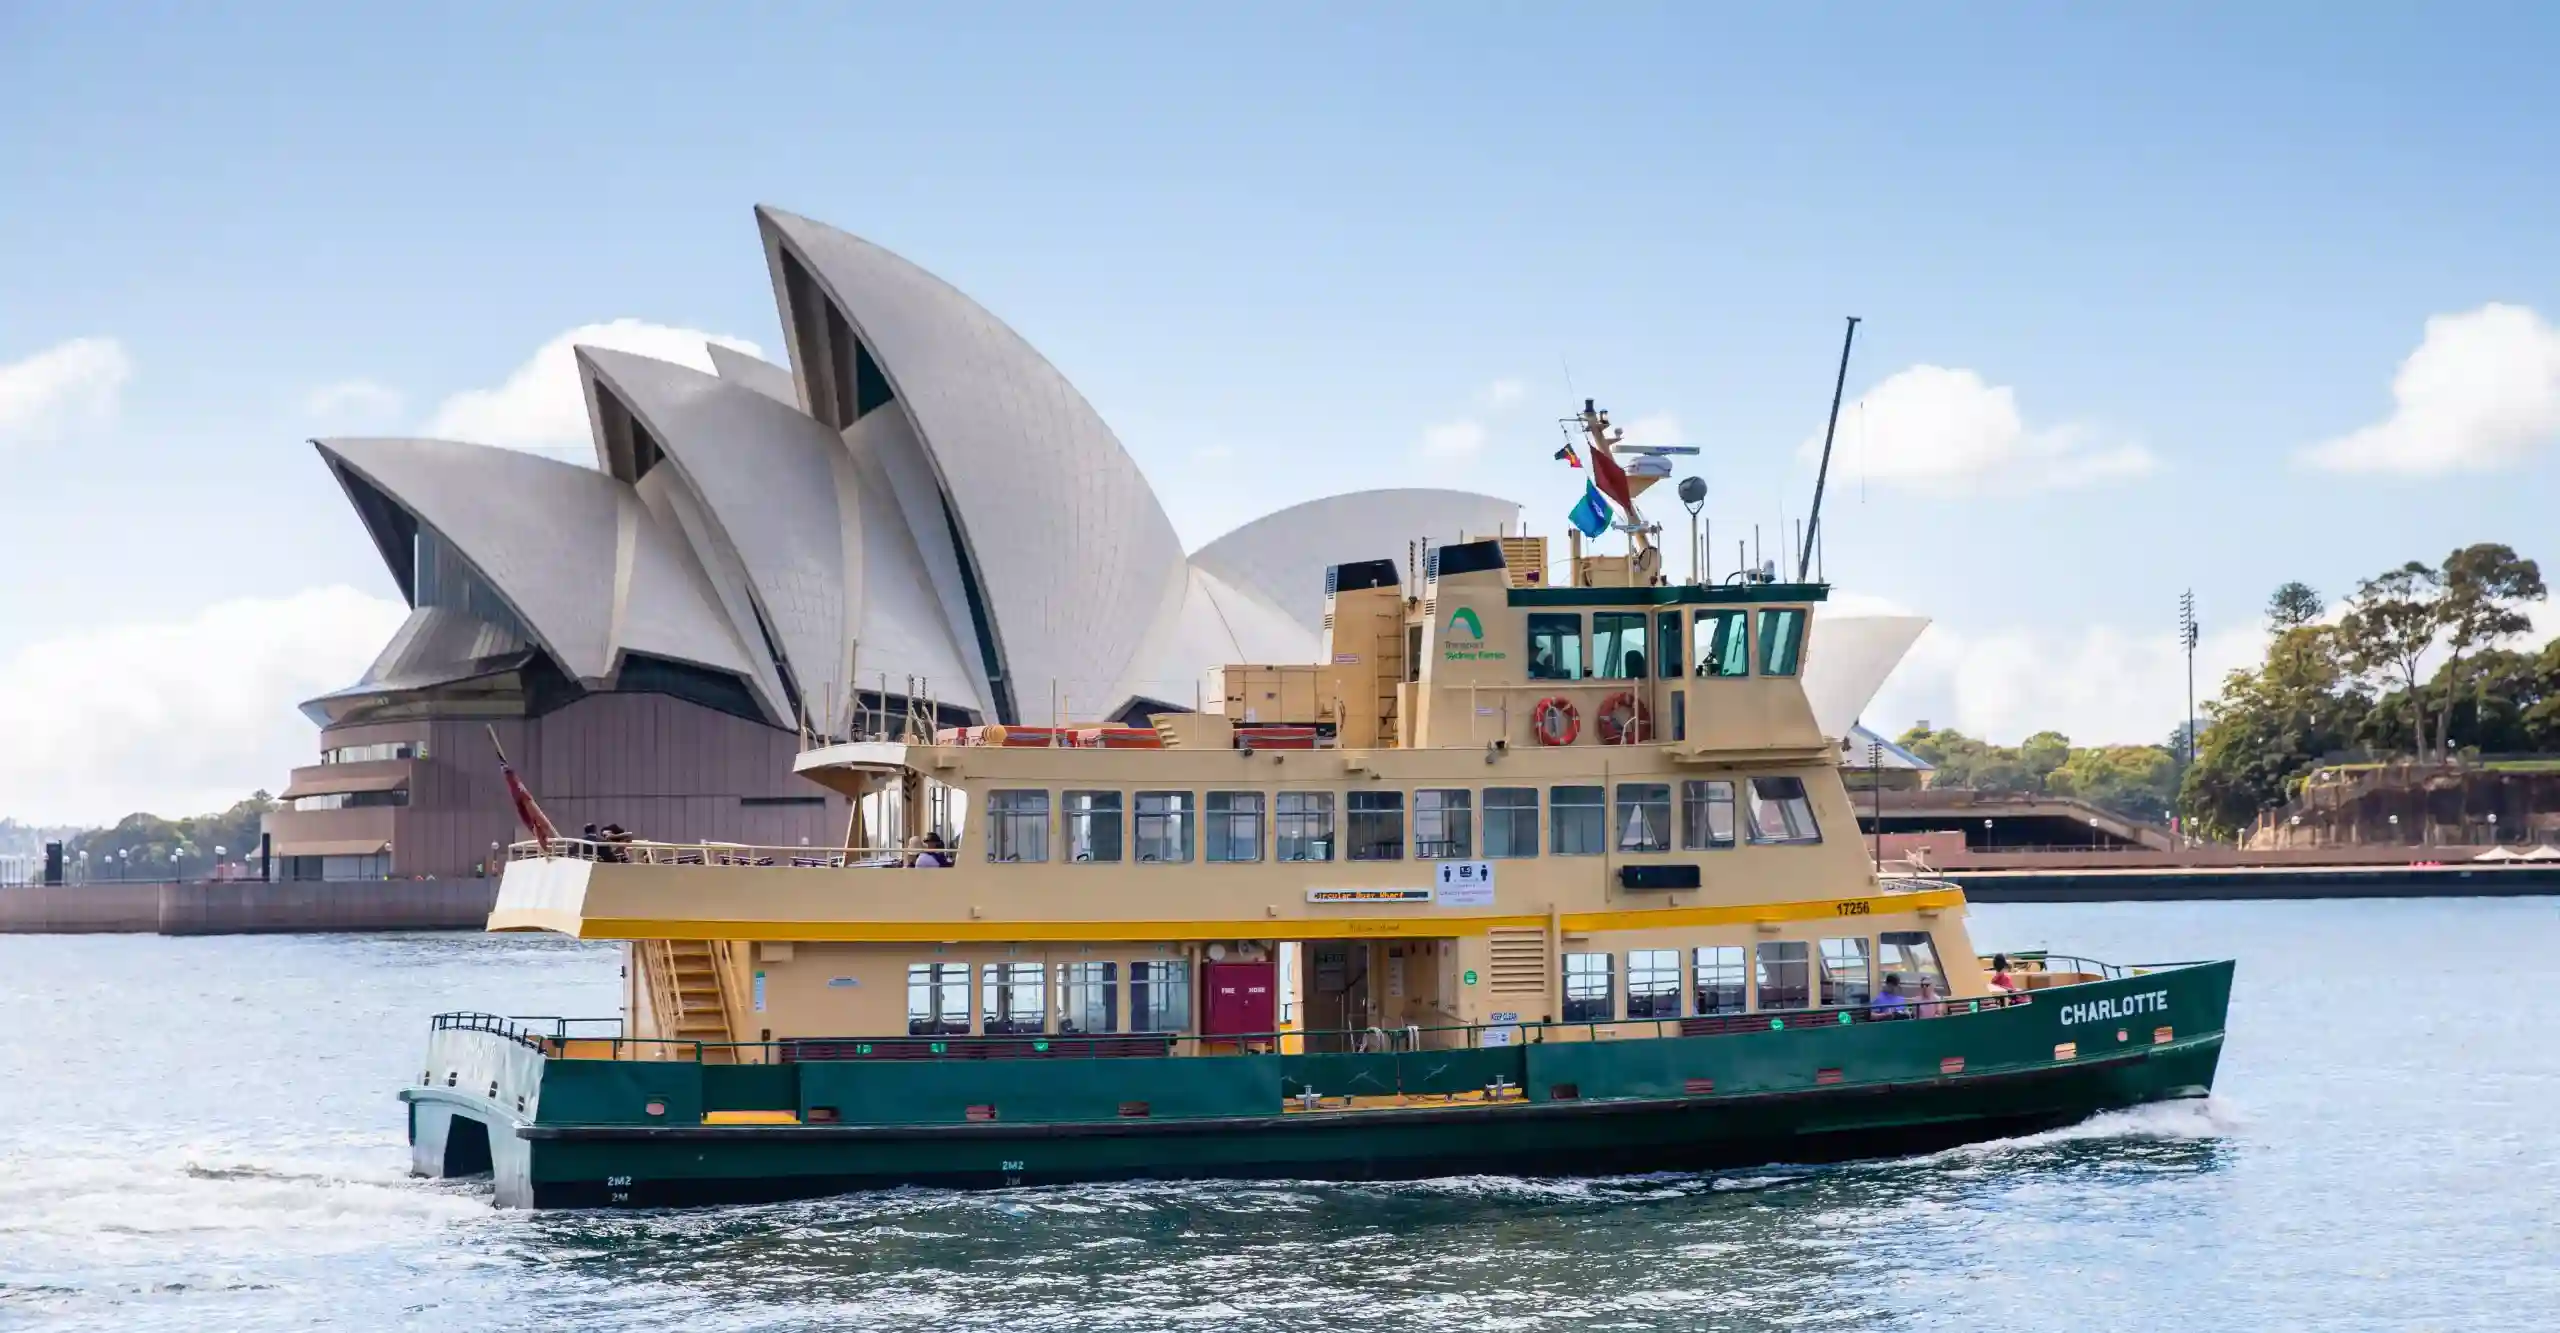 Sydney's Public Ferries